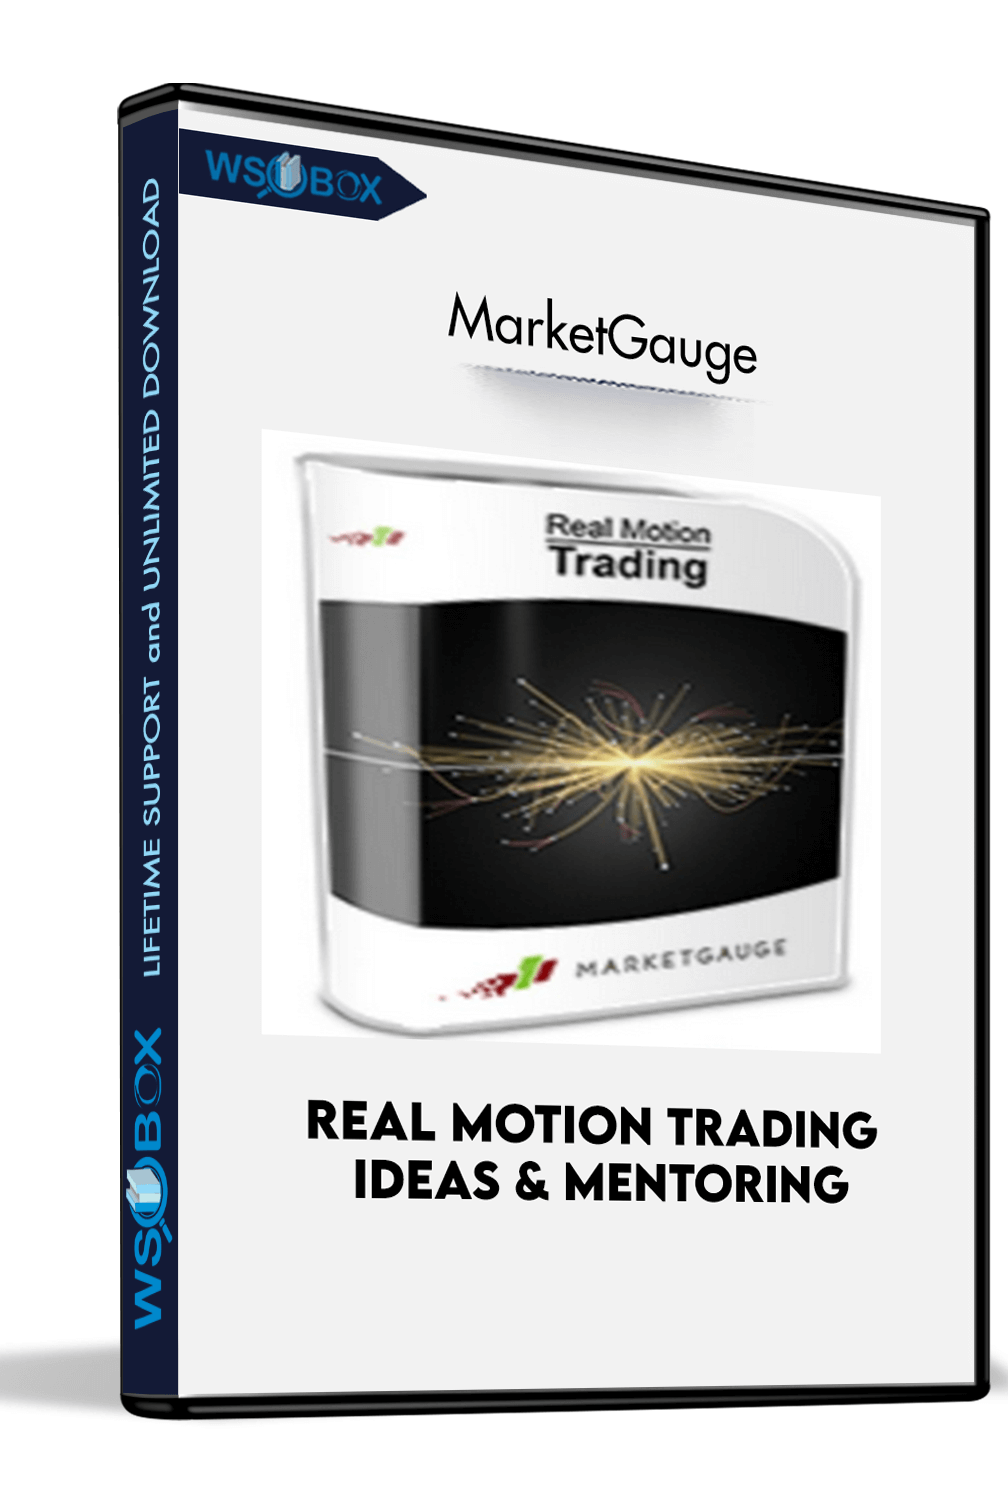 real-motion-trading-ideas-mentoring-marketgauge